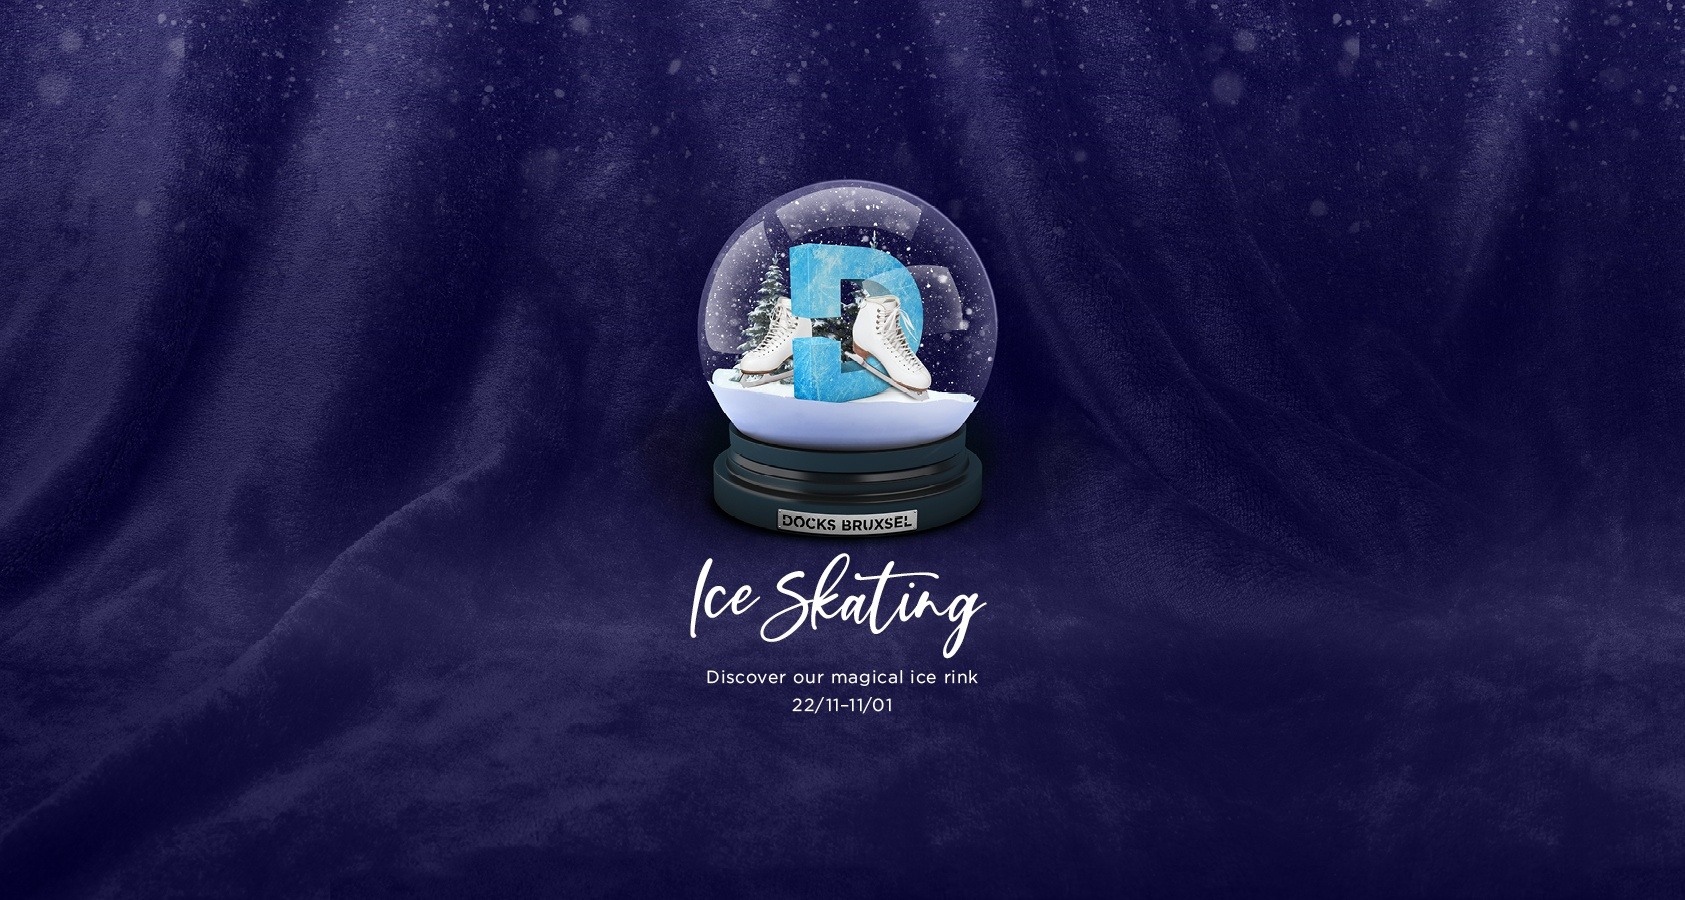 J11952 Ice Skating website events 1685x900 v1aw 2